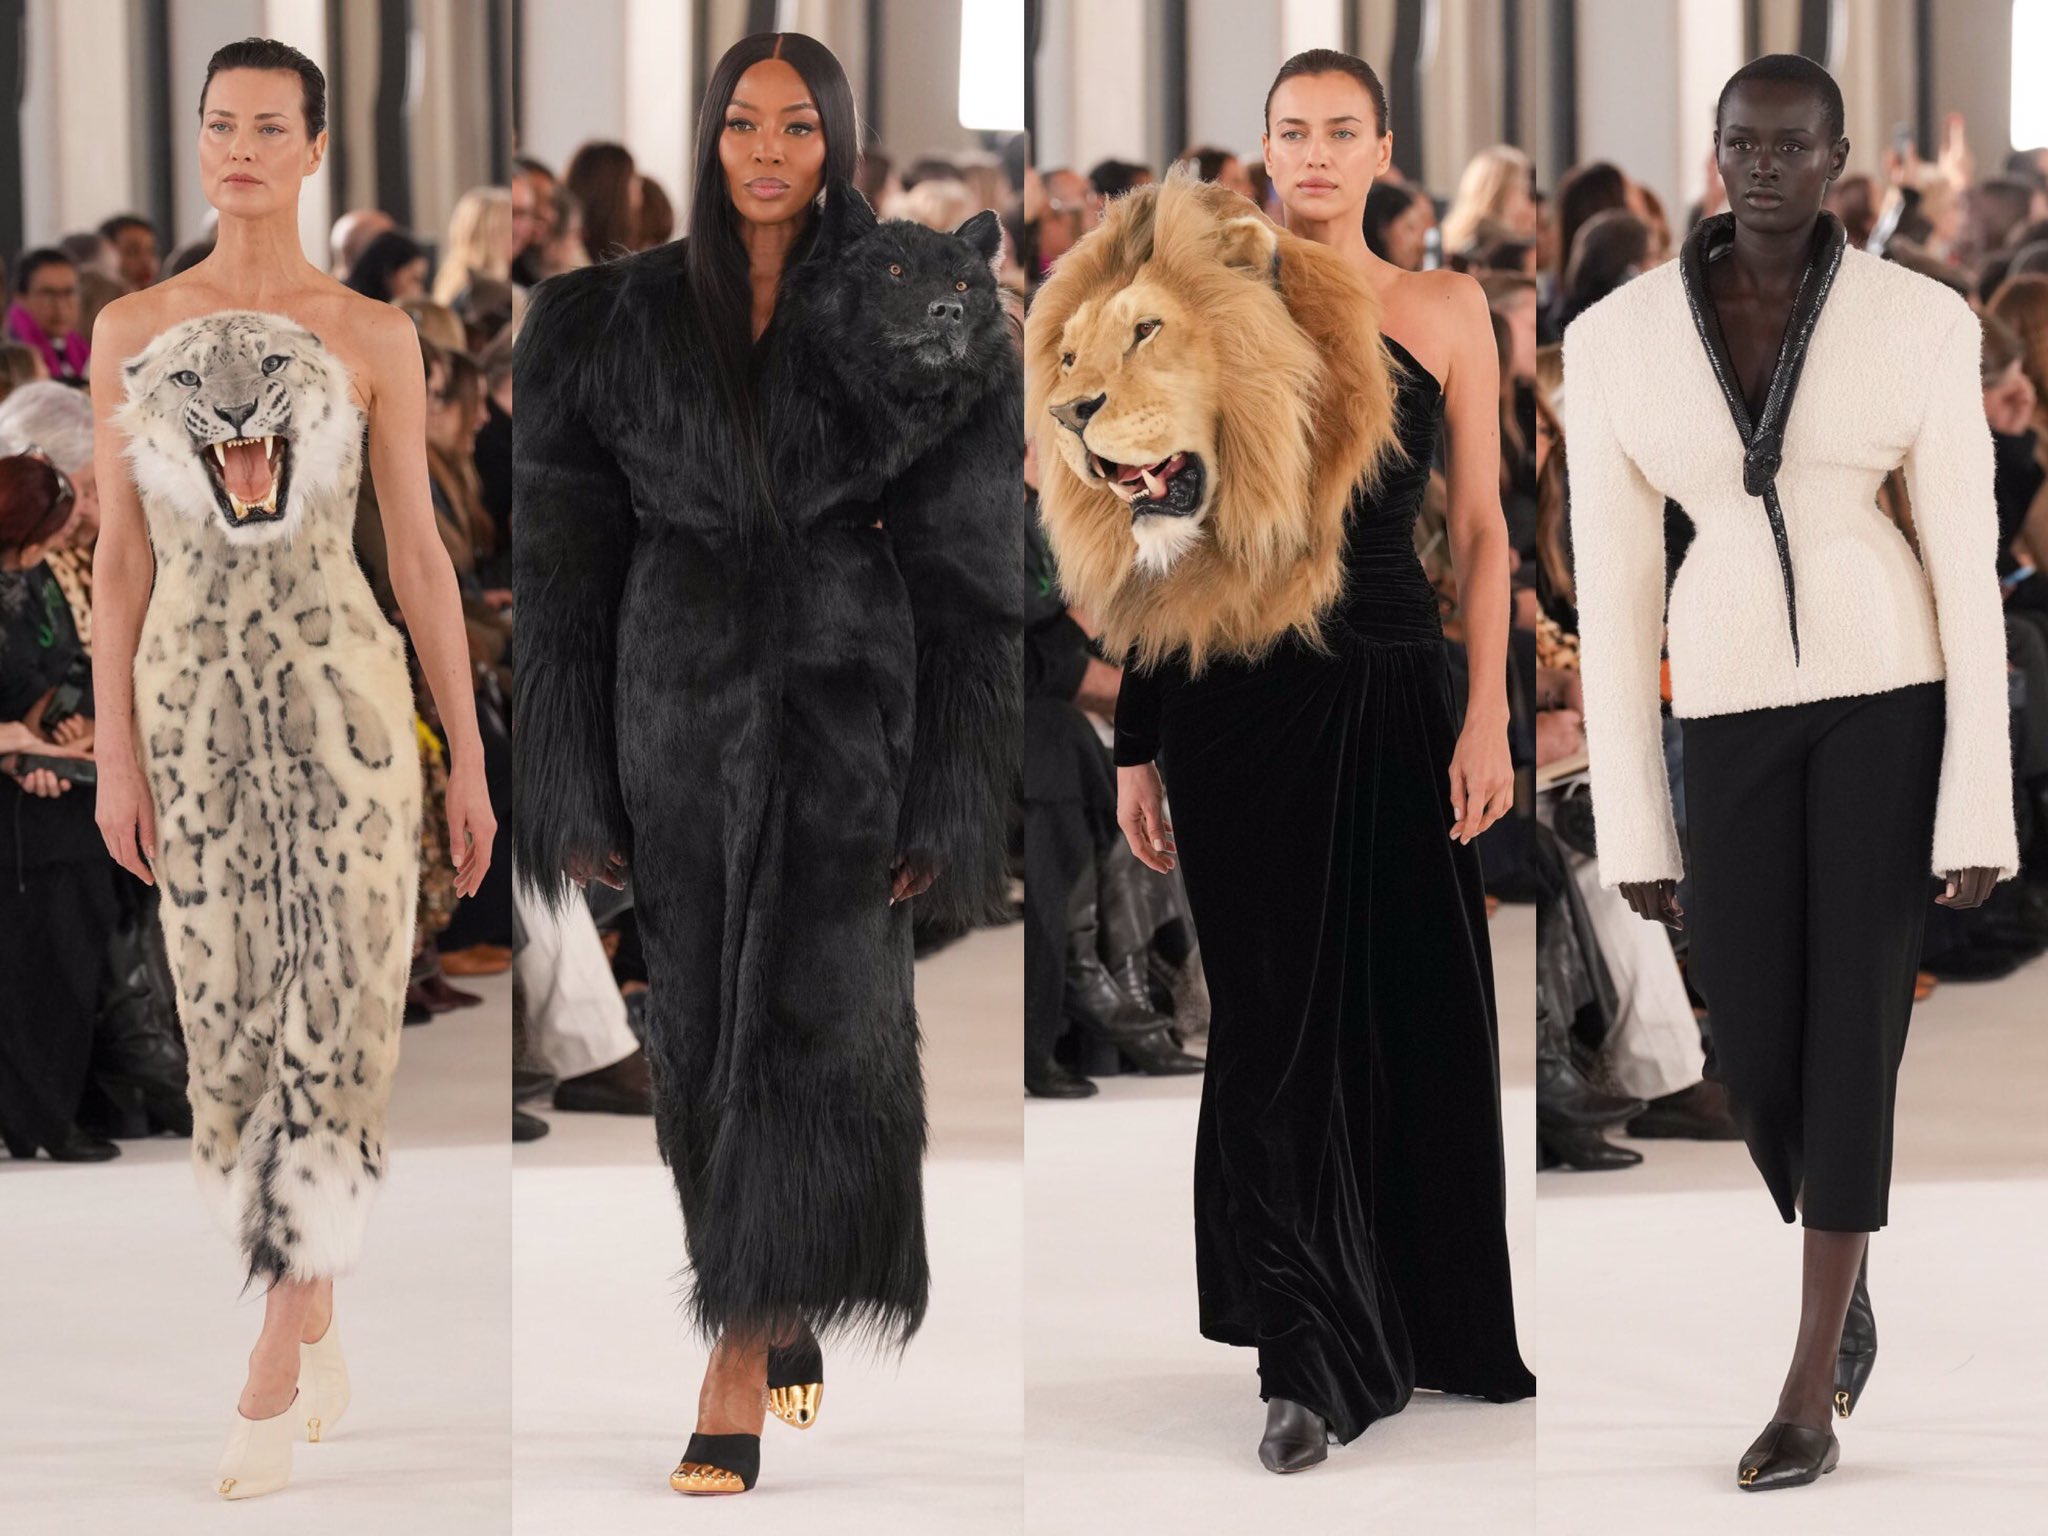 Kylie Jenner’s Lion Head Dress Raises Controversy